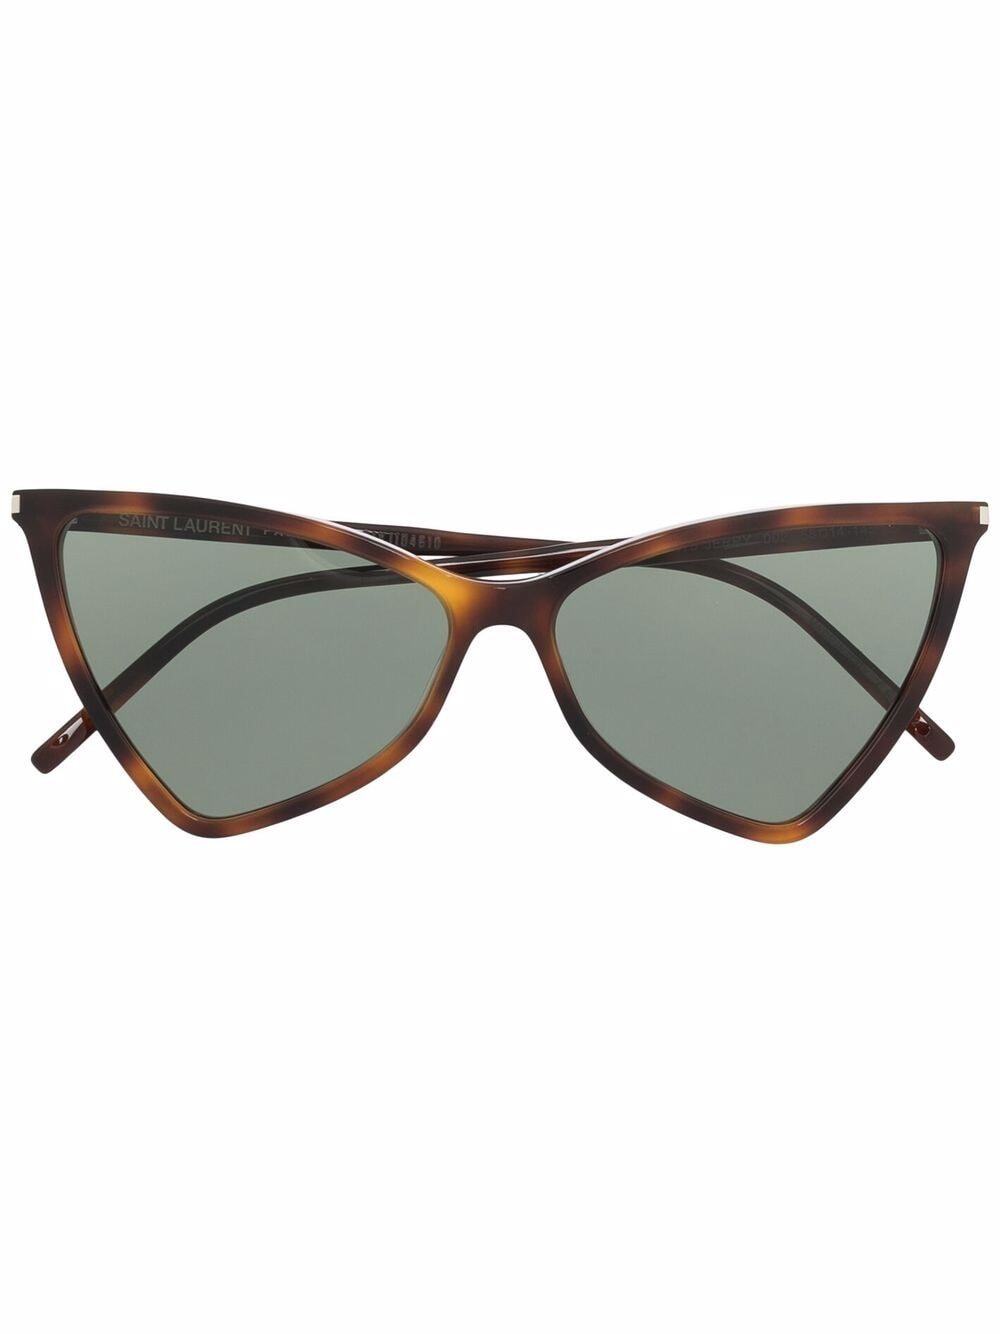 Saint Laurent Eyewear Jerry cat-eye sunglasses - Brown